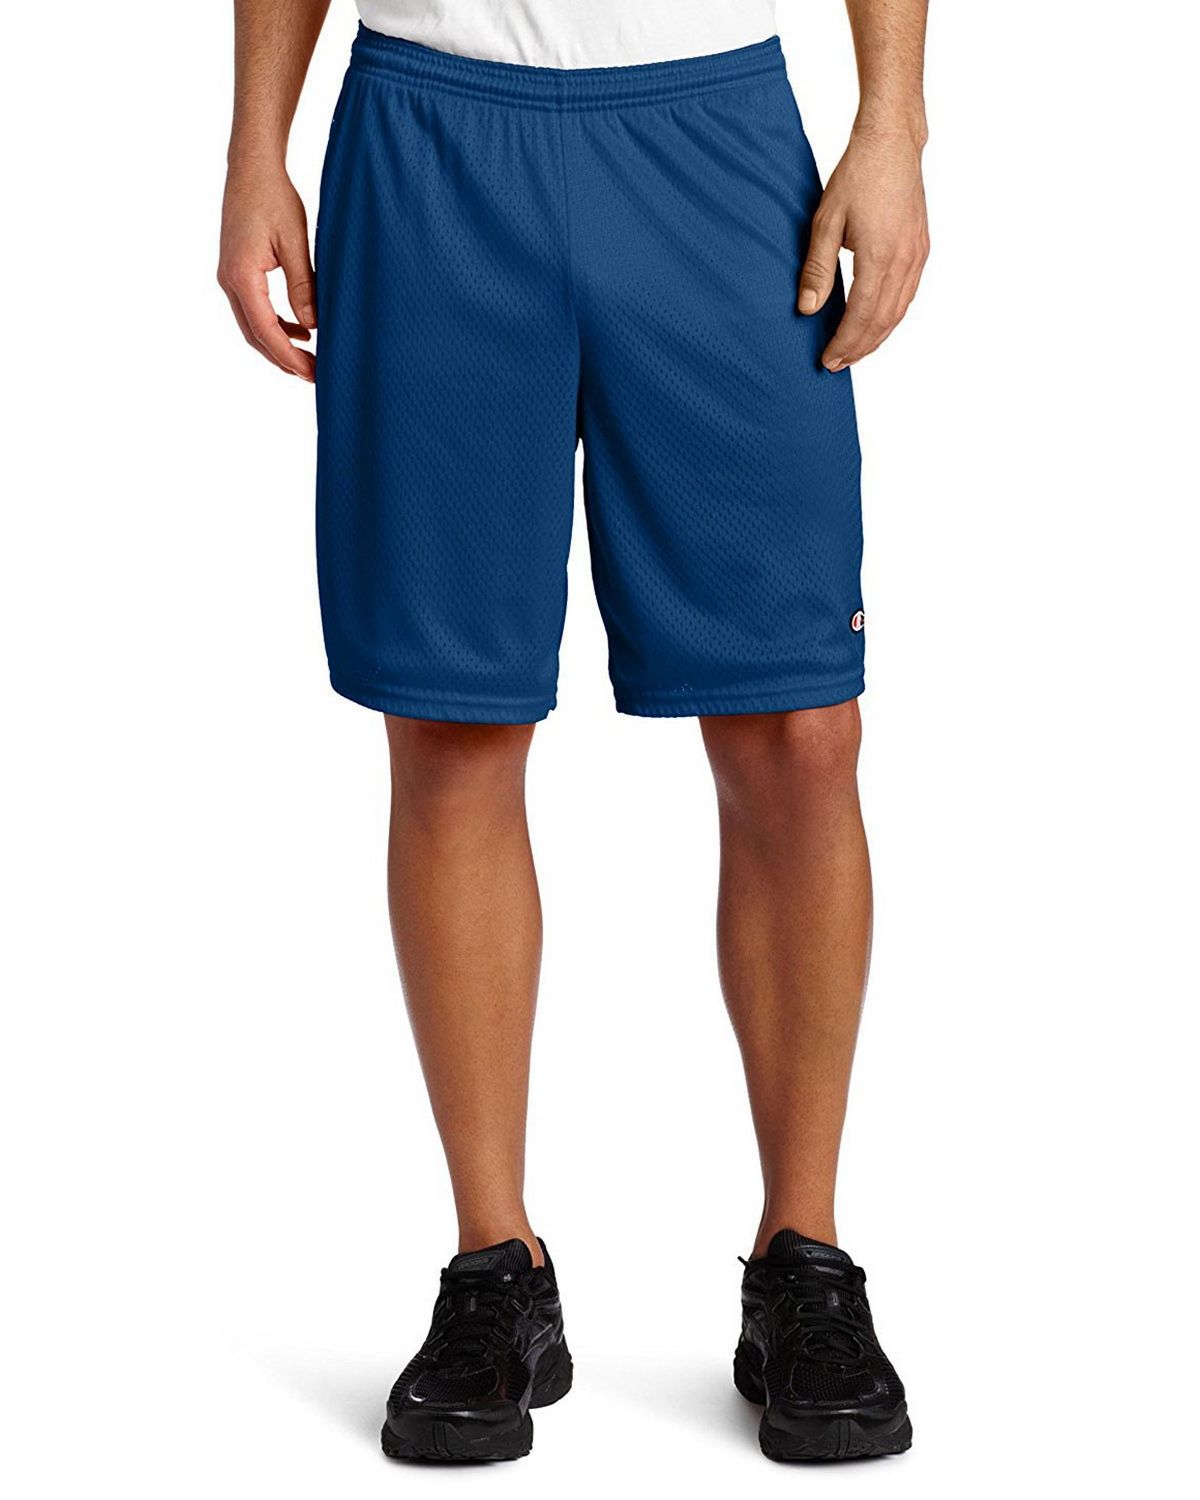 Champion Men's Long Mesh Shorts with Pockets S162